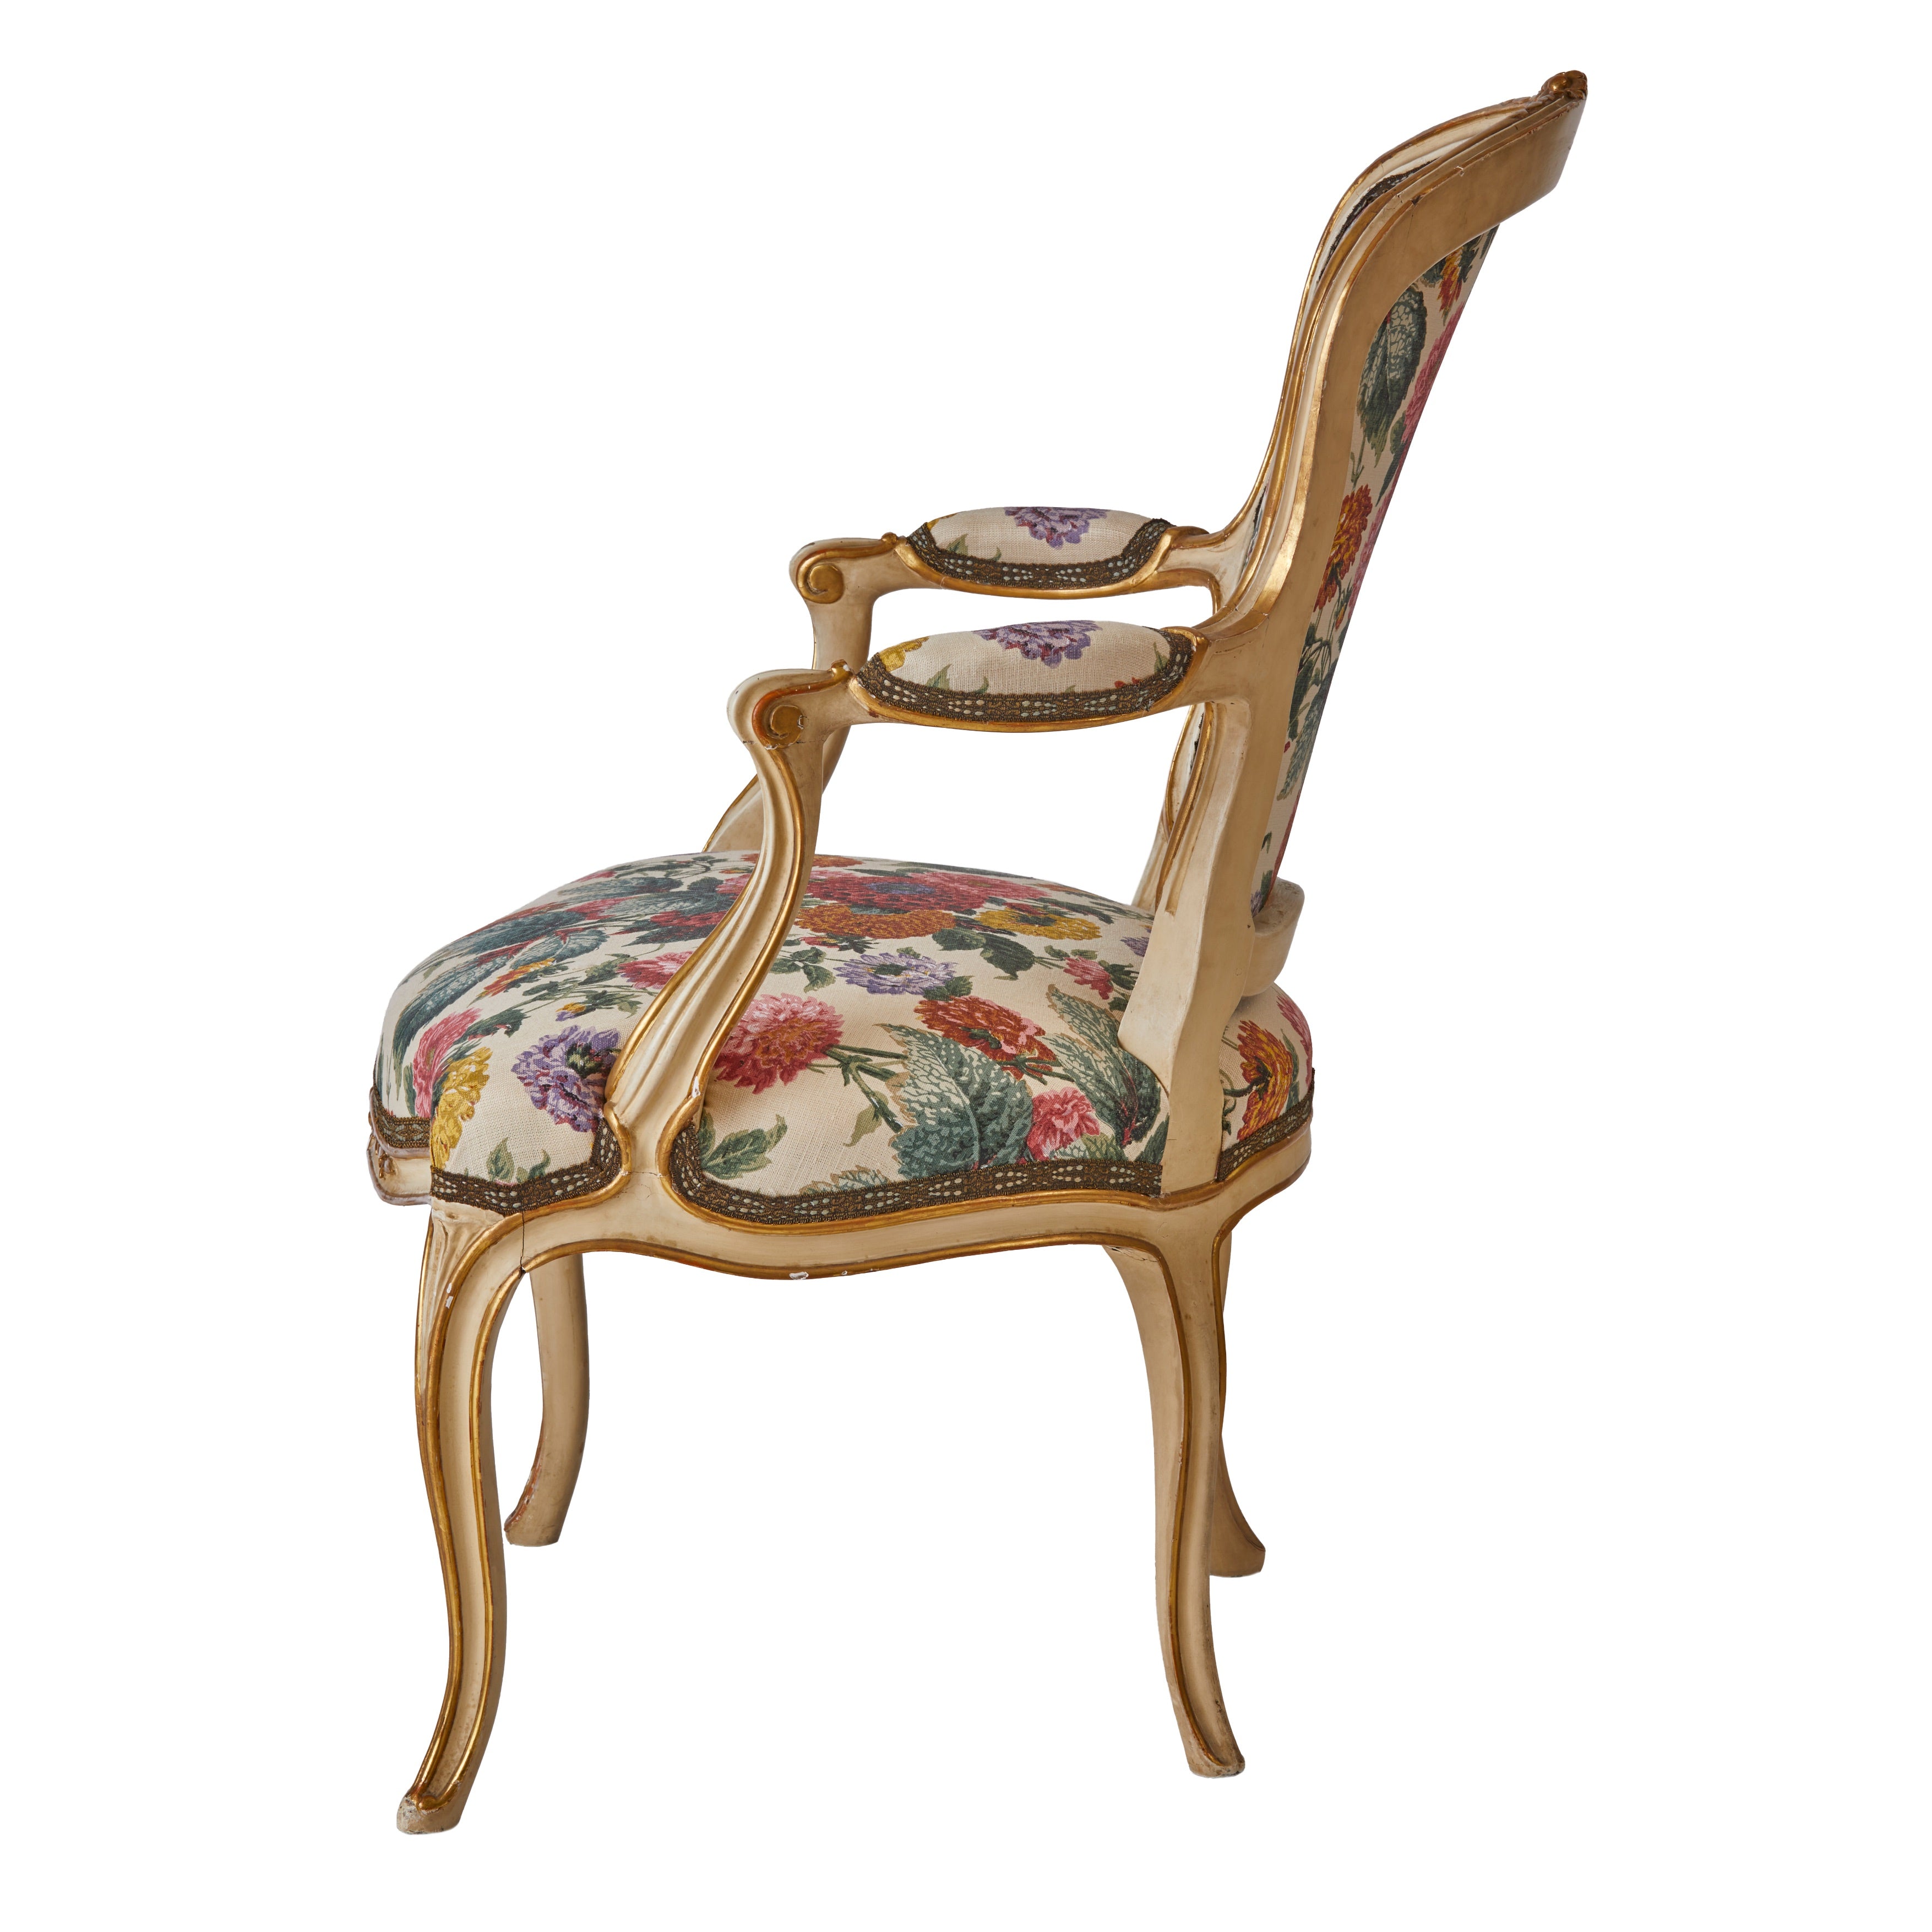 A 19th Century Parcel-Gilt Salon Chair in Flora Soames Dahlias with Antique Gold Decorated Braid